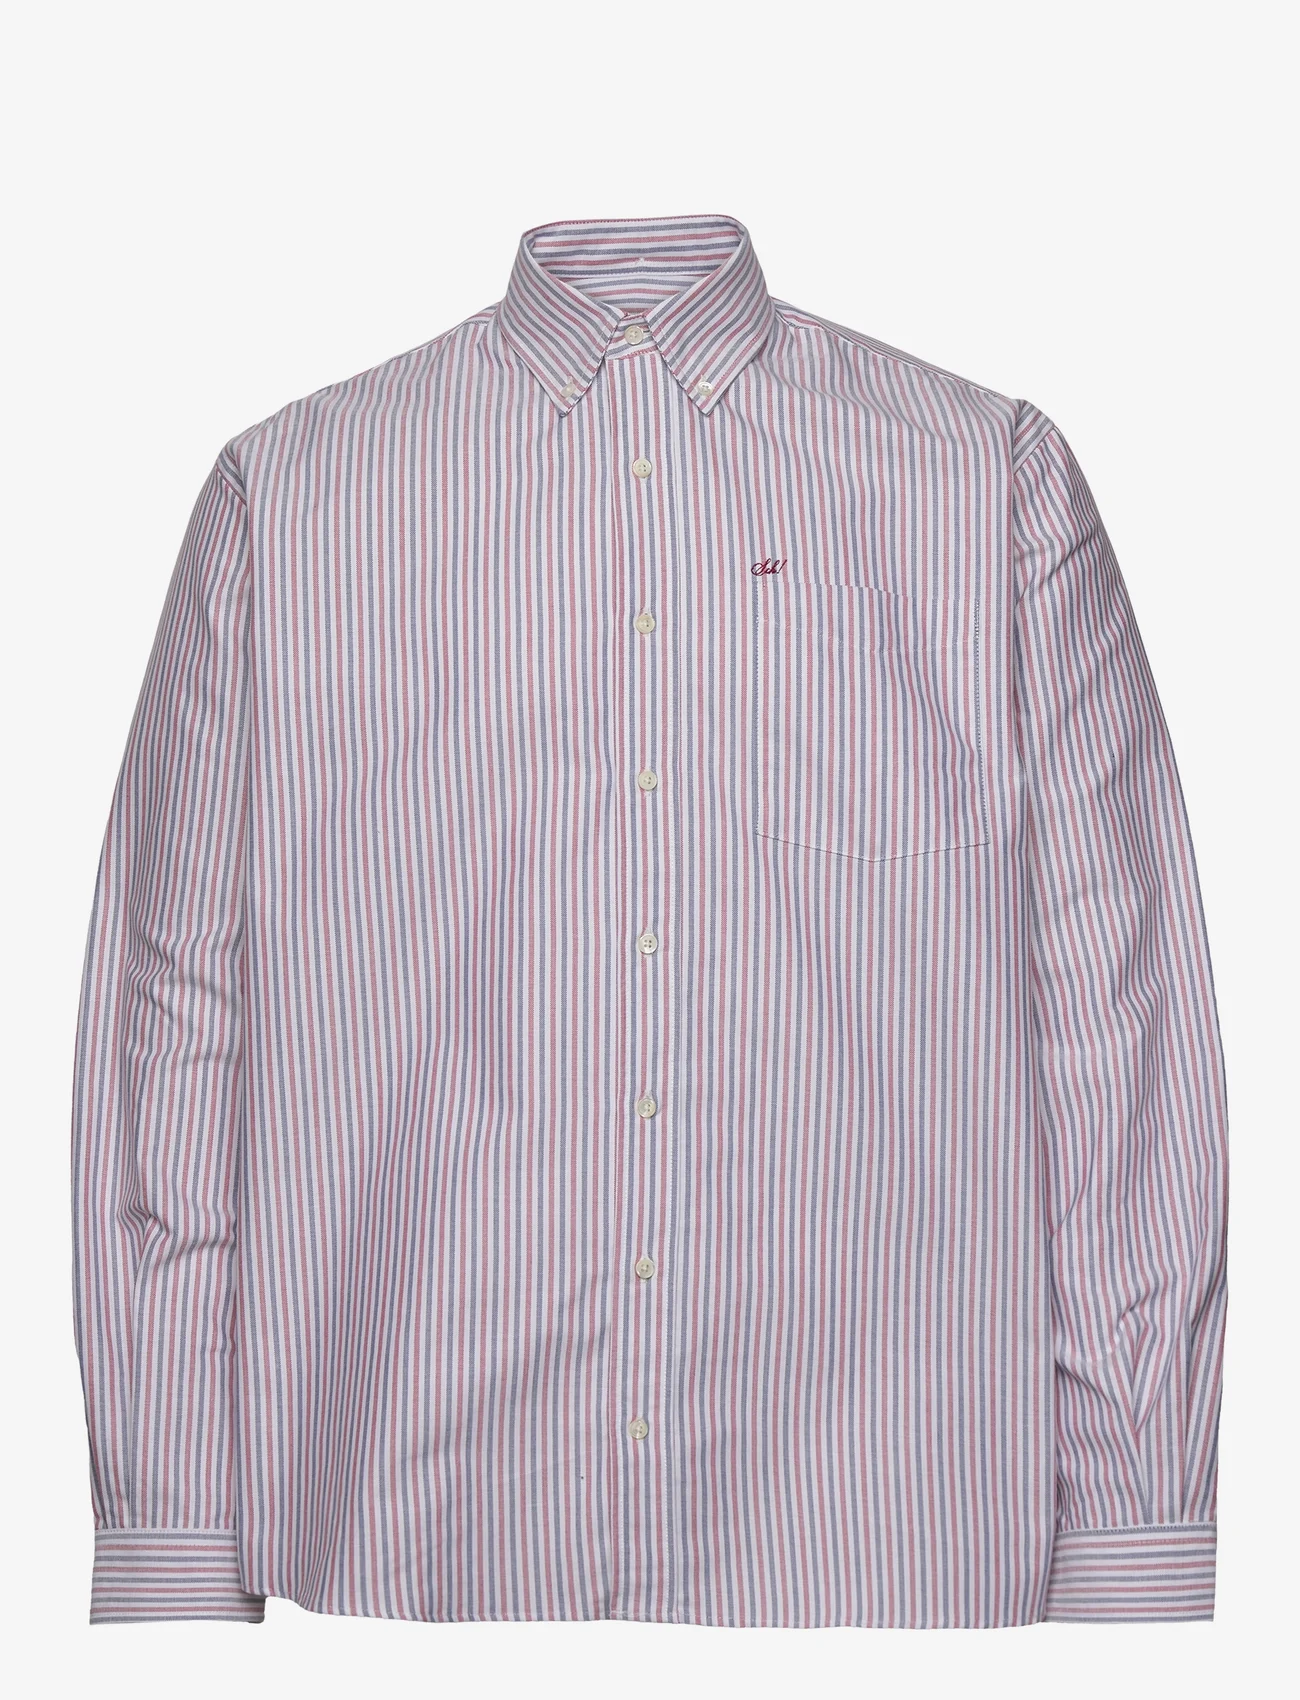 Schnayderman's - SHIRT BD NON-BINARY EMBROIDERY - kasdienio stiliaus marškiniai - red, white and navy - 0